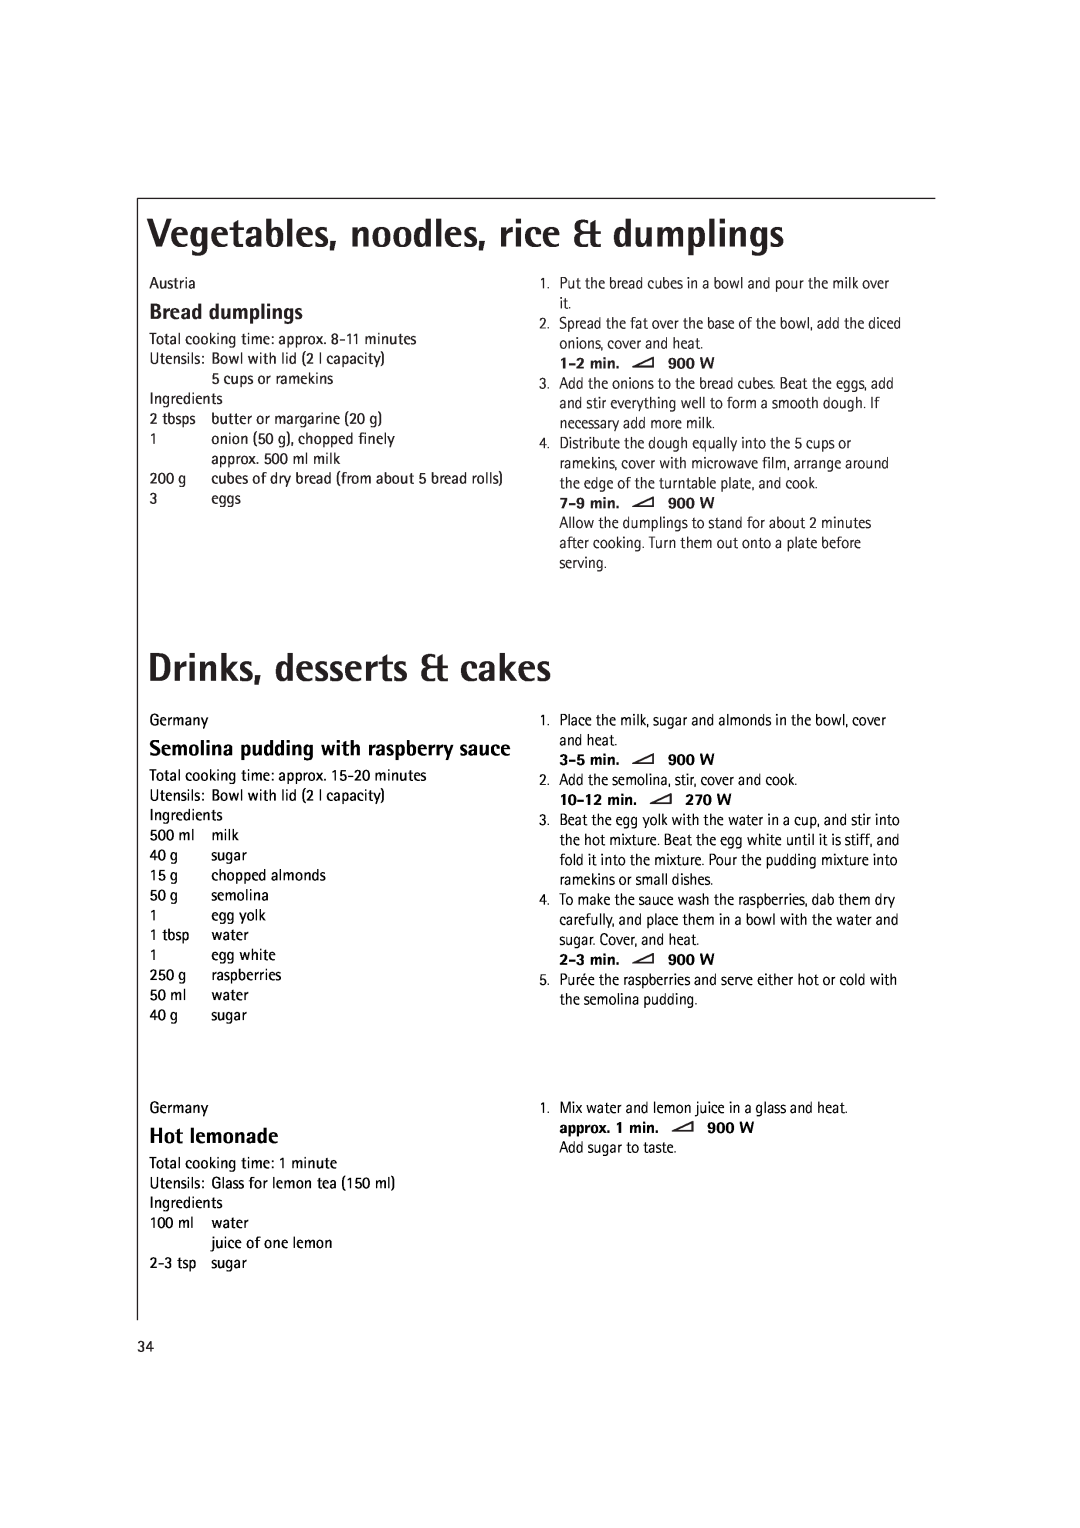 AEG MC2660E Drinks, desserts & cakes, Bread dumplings, Hot lemonade, Vegetables, noodles, rice & dumplings, 1-2 min. 900 W 